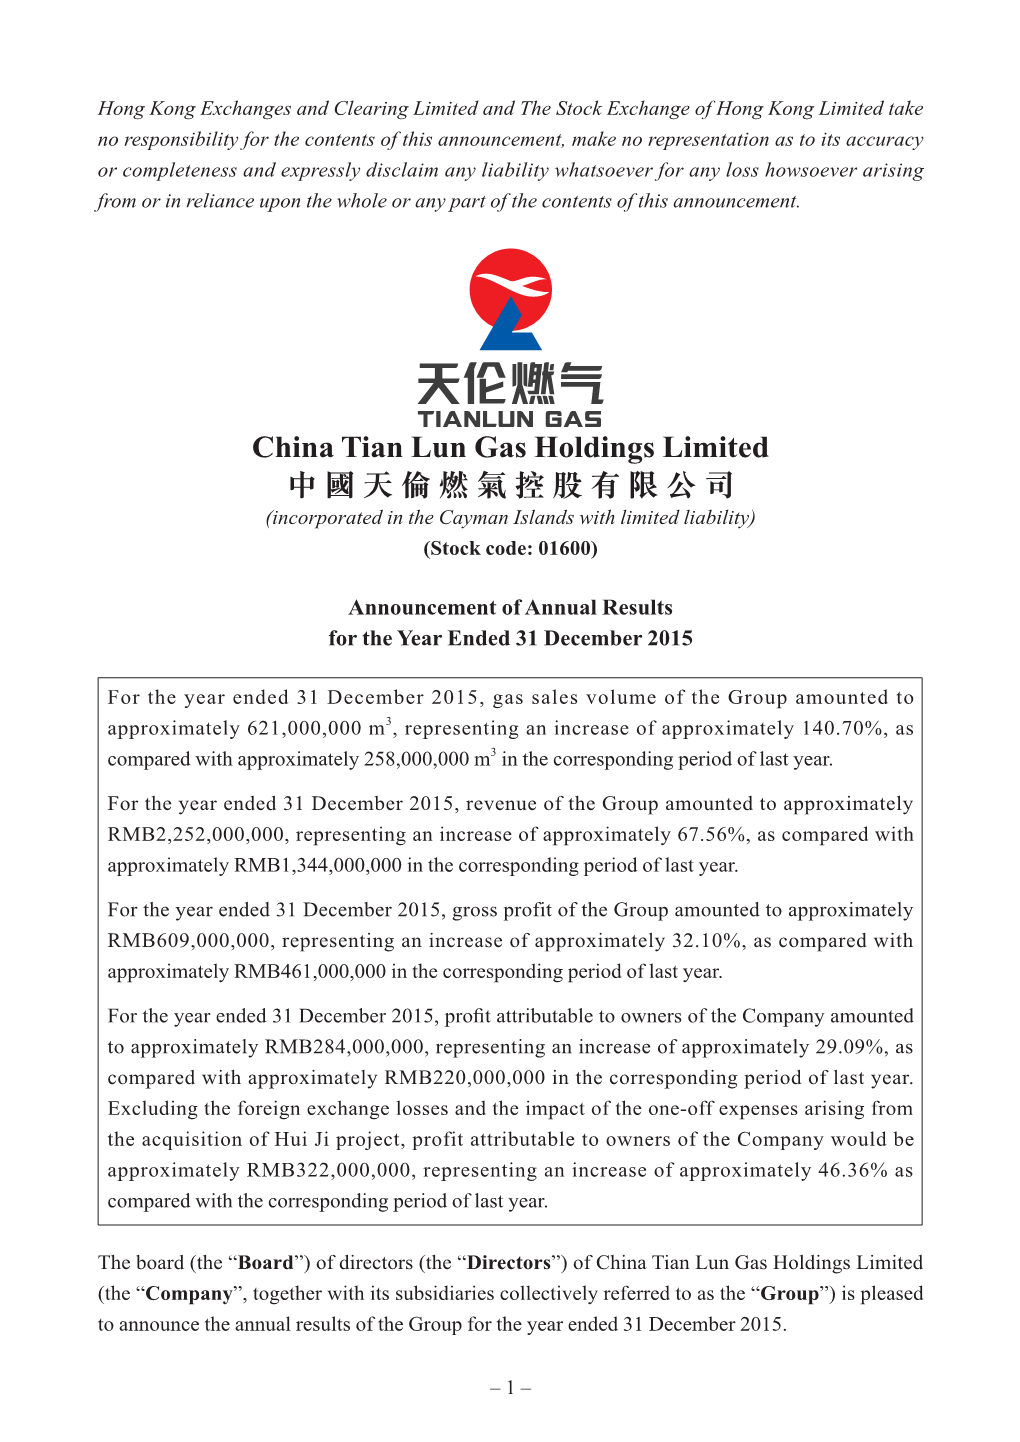 China Tian Lun Gas Holdings Limited 中國天倫燃氣控股有限